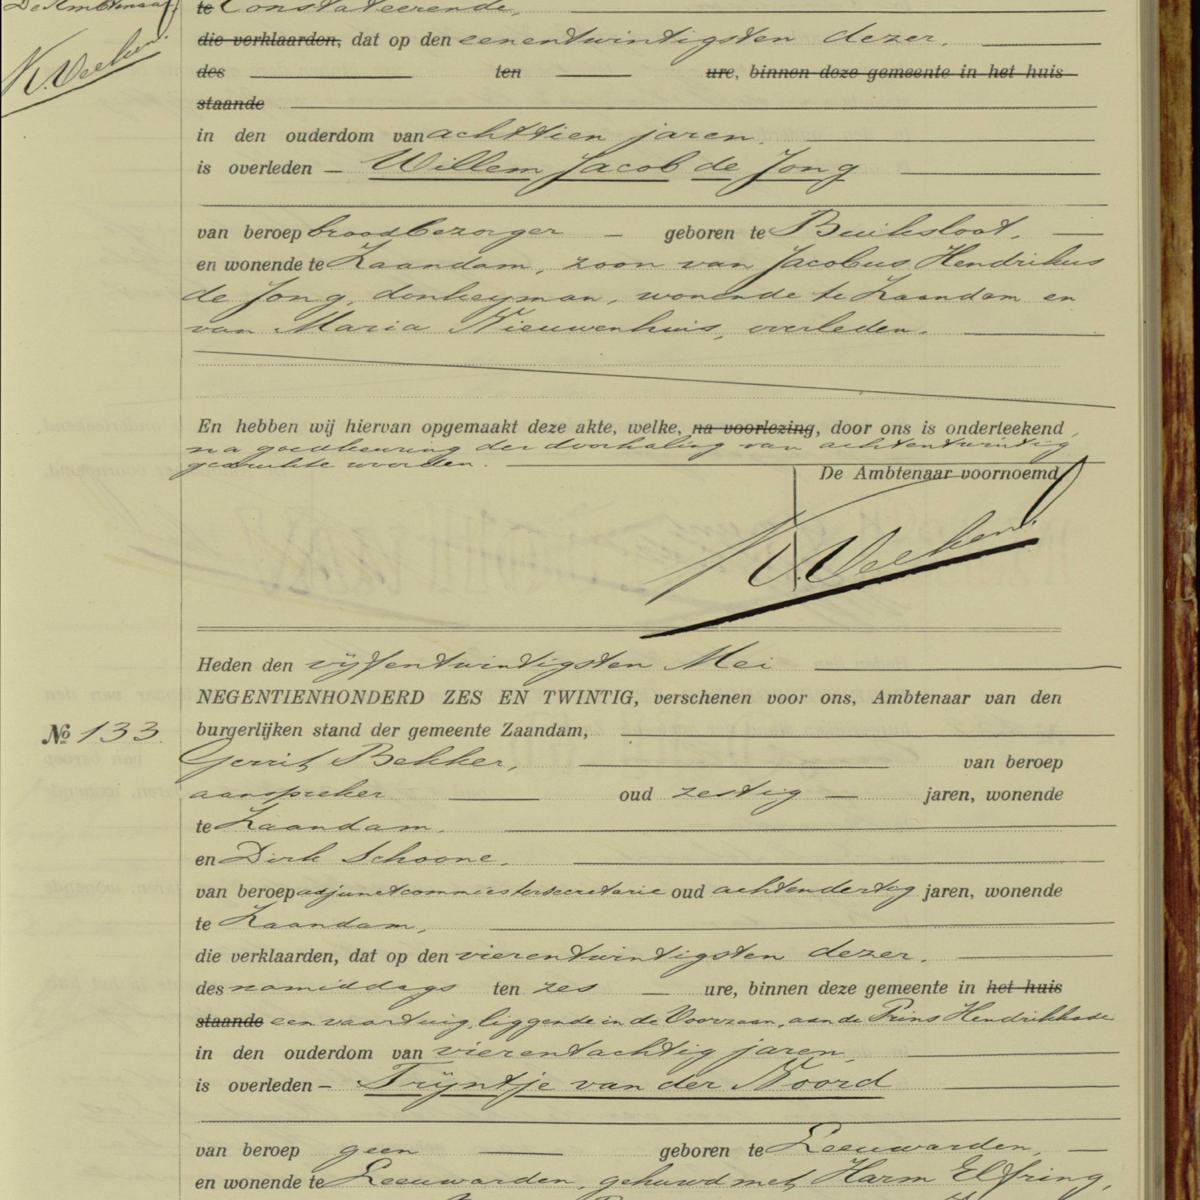 Civil registry of deaths, Zaandam, 1926, records 123-133